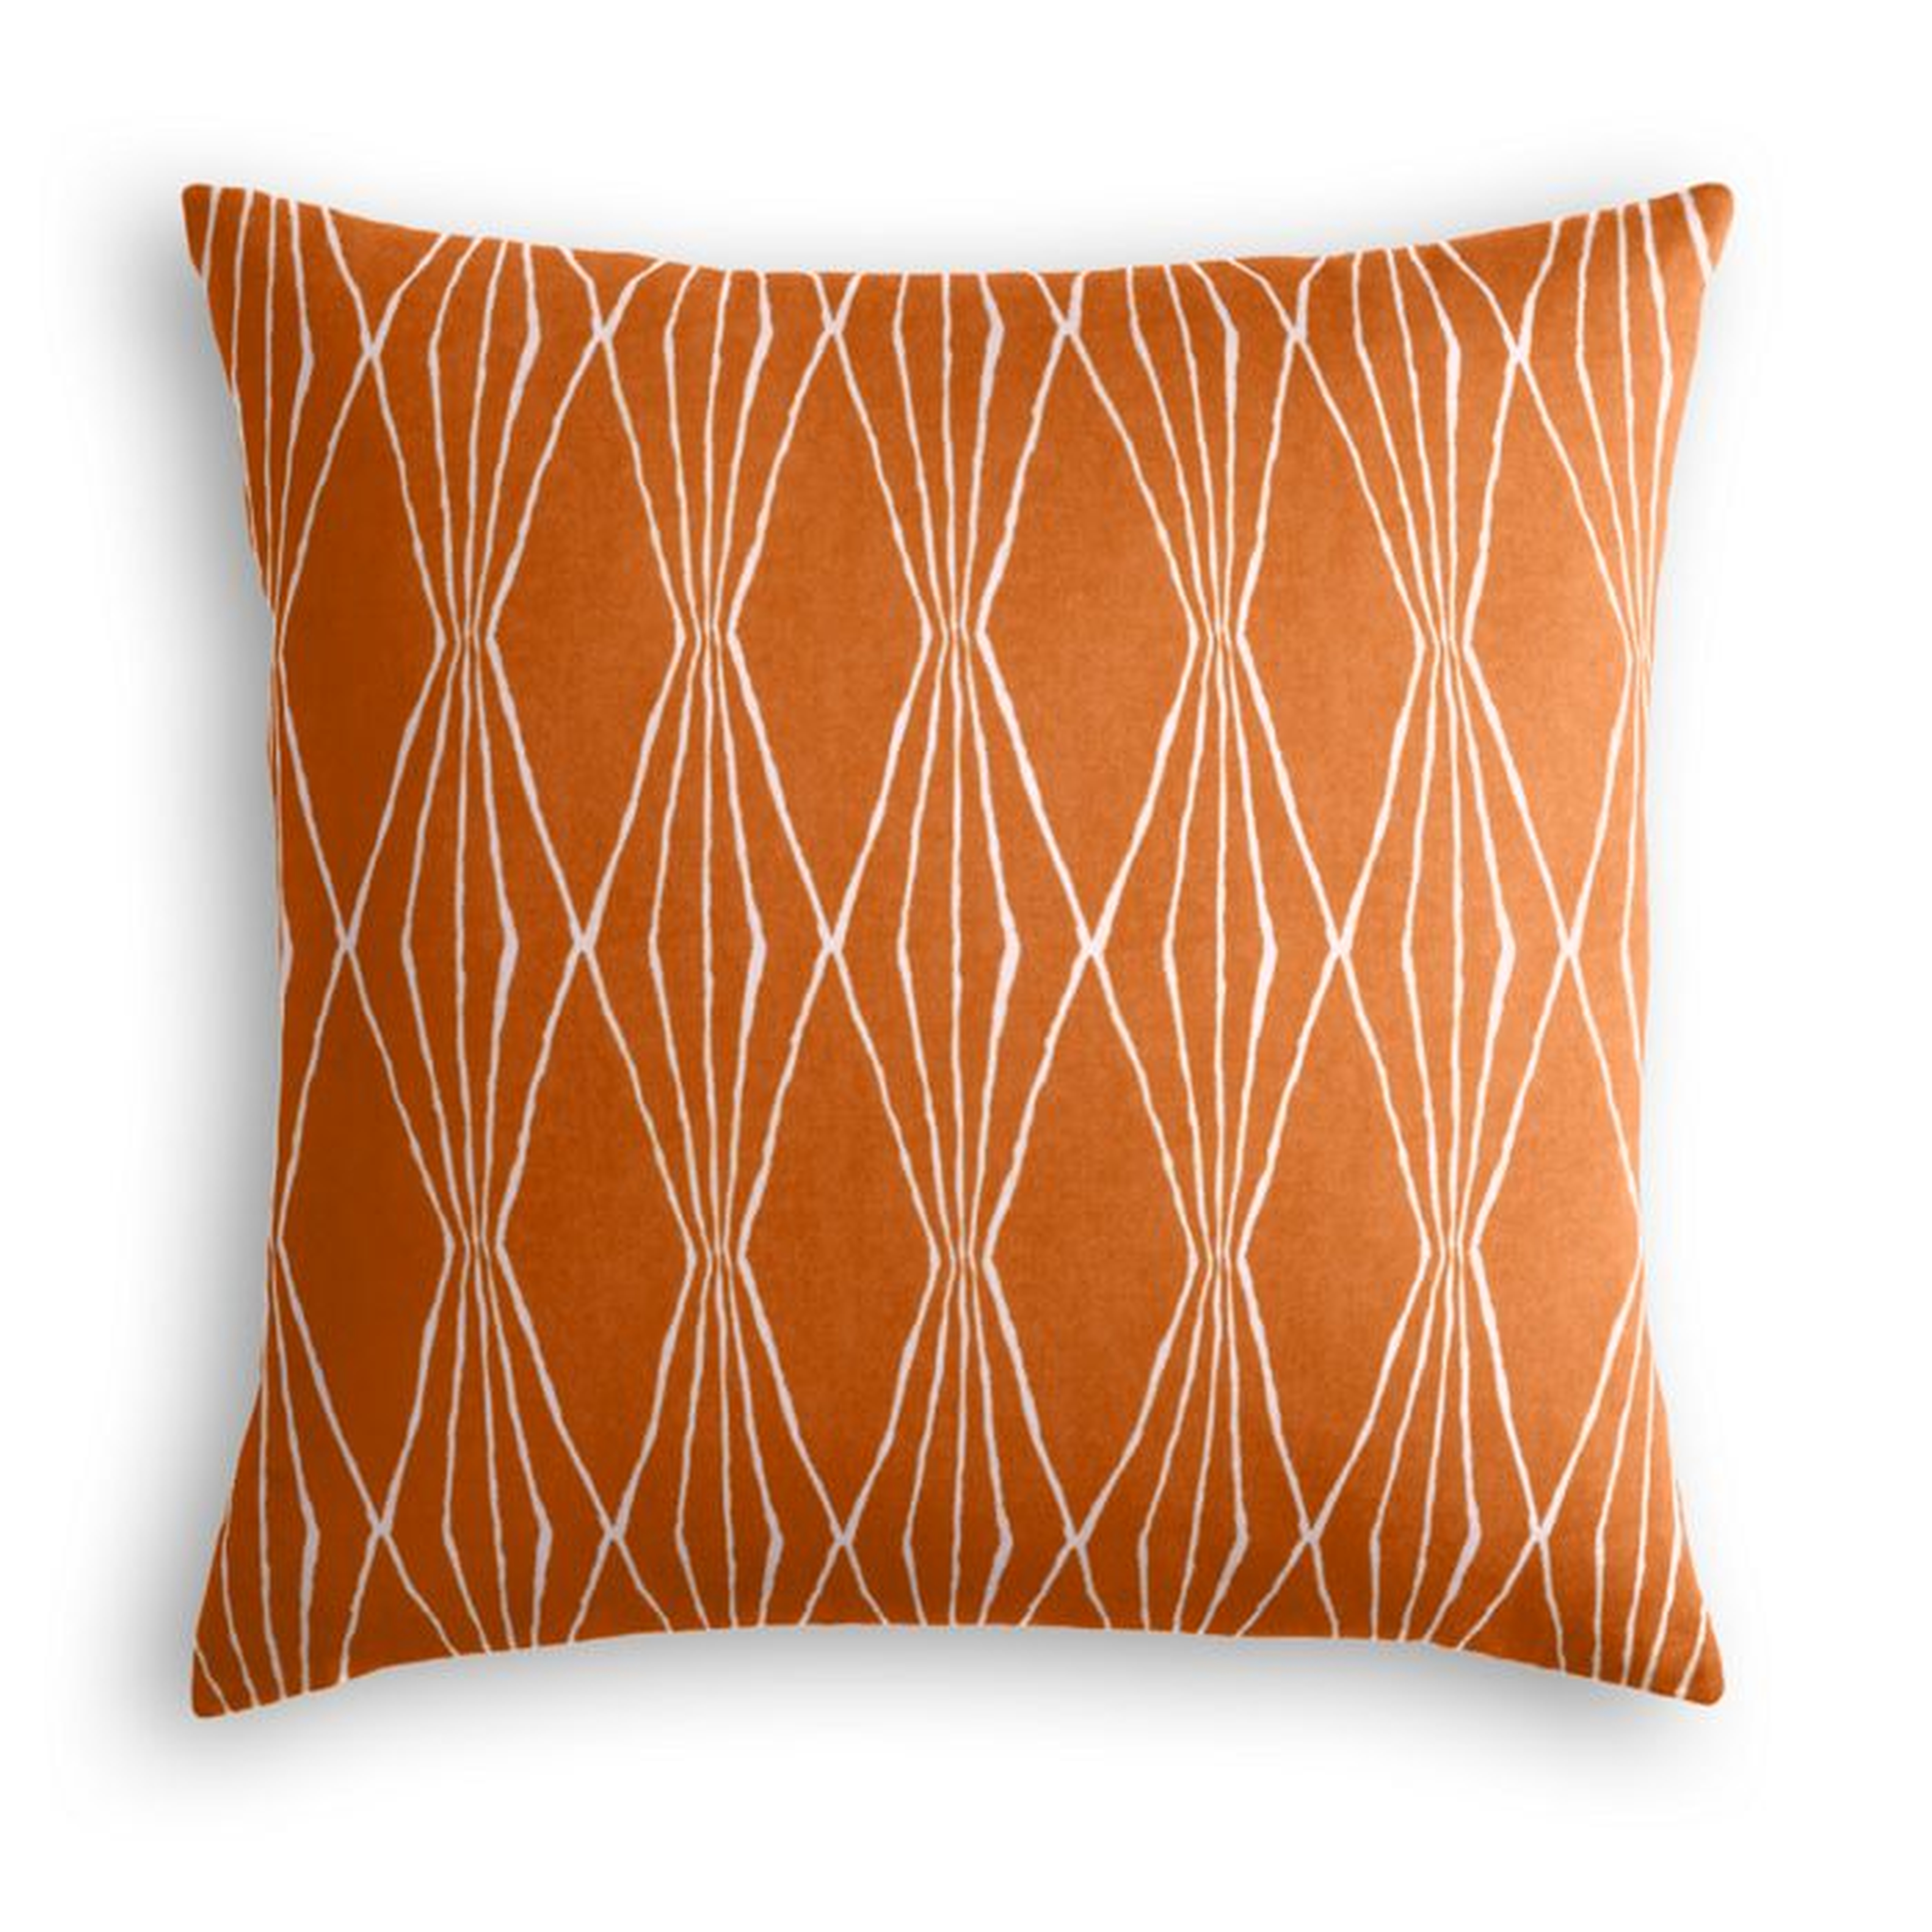 Custom Throw Pillow - Orange Crush - 16" x 16" - Feather Down Insert - Loom Decor